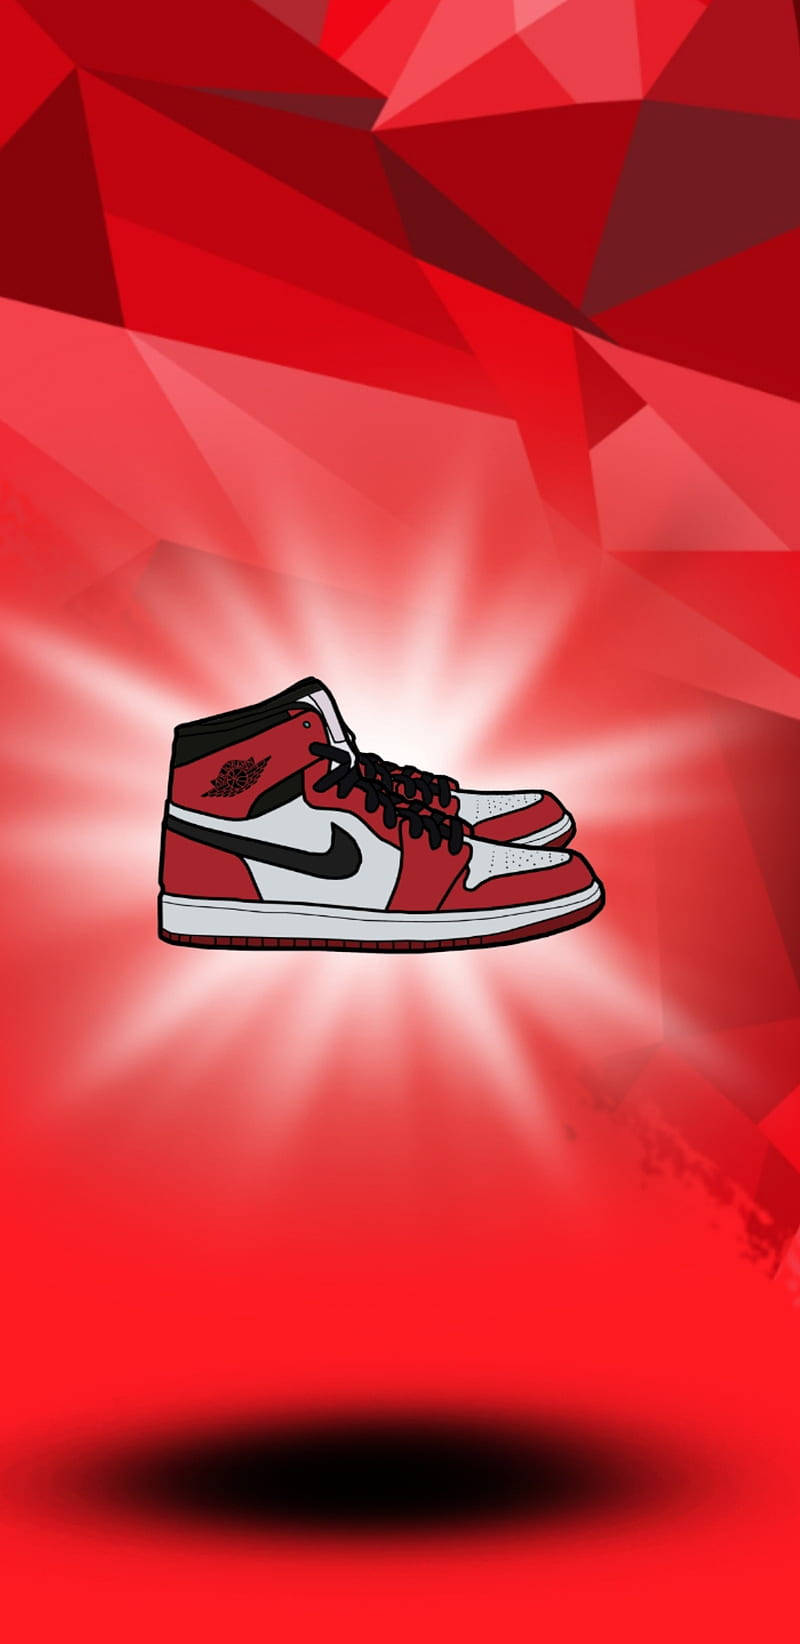 Nike Air Jordan 1 Chicago Red Background Wallpaper